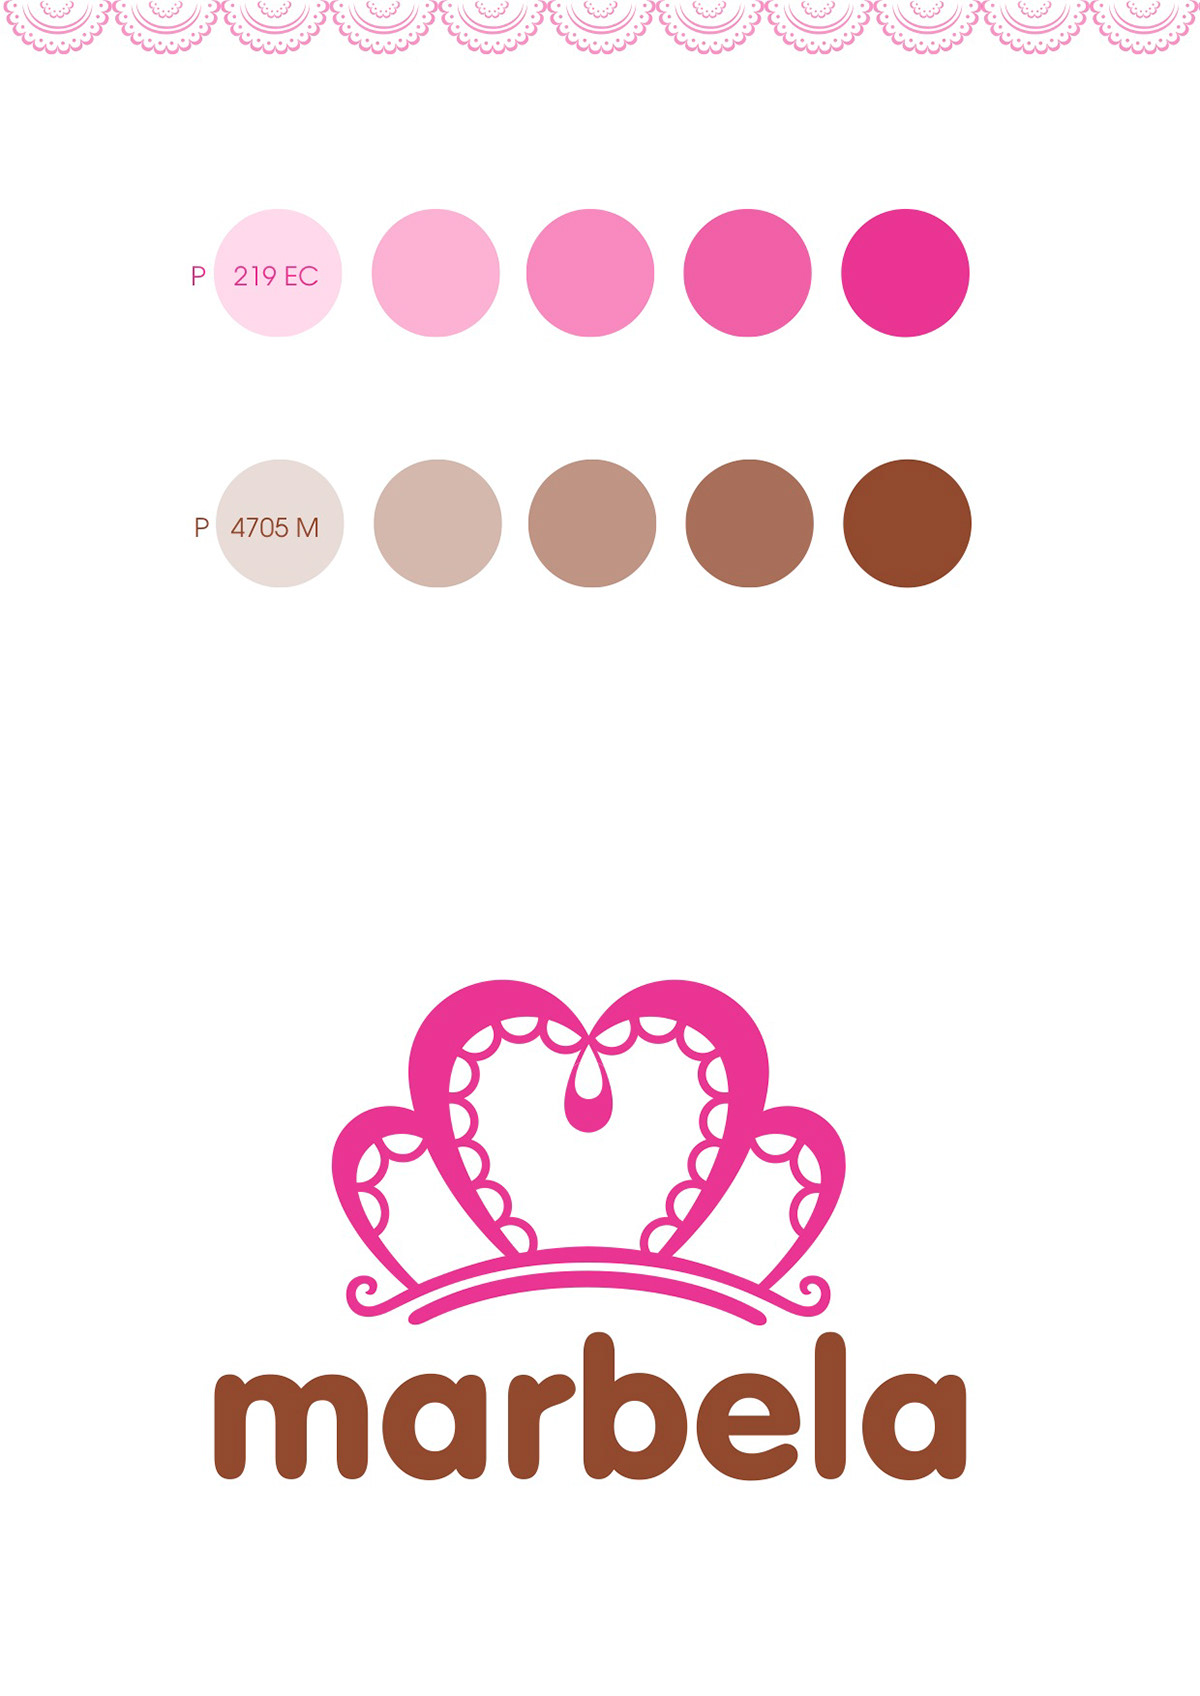 design  Packaging  Illustration identity  branding  corporate idendtity  dessert   cake Food   Pink   crown  muffin  marmalade  Sugar  cafe